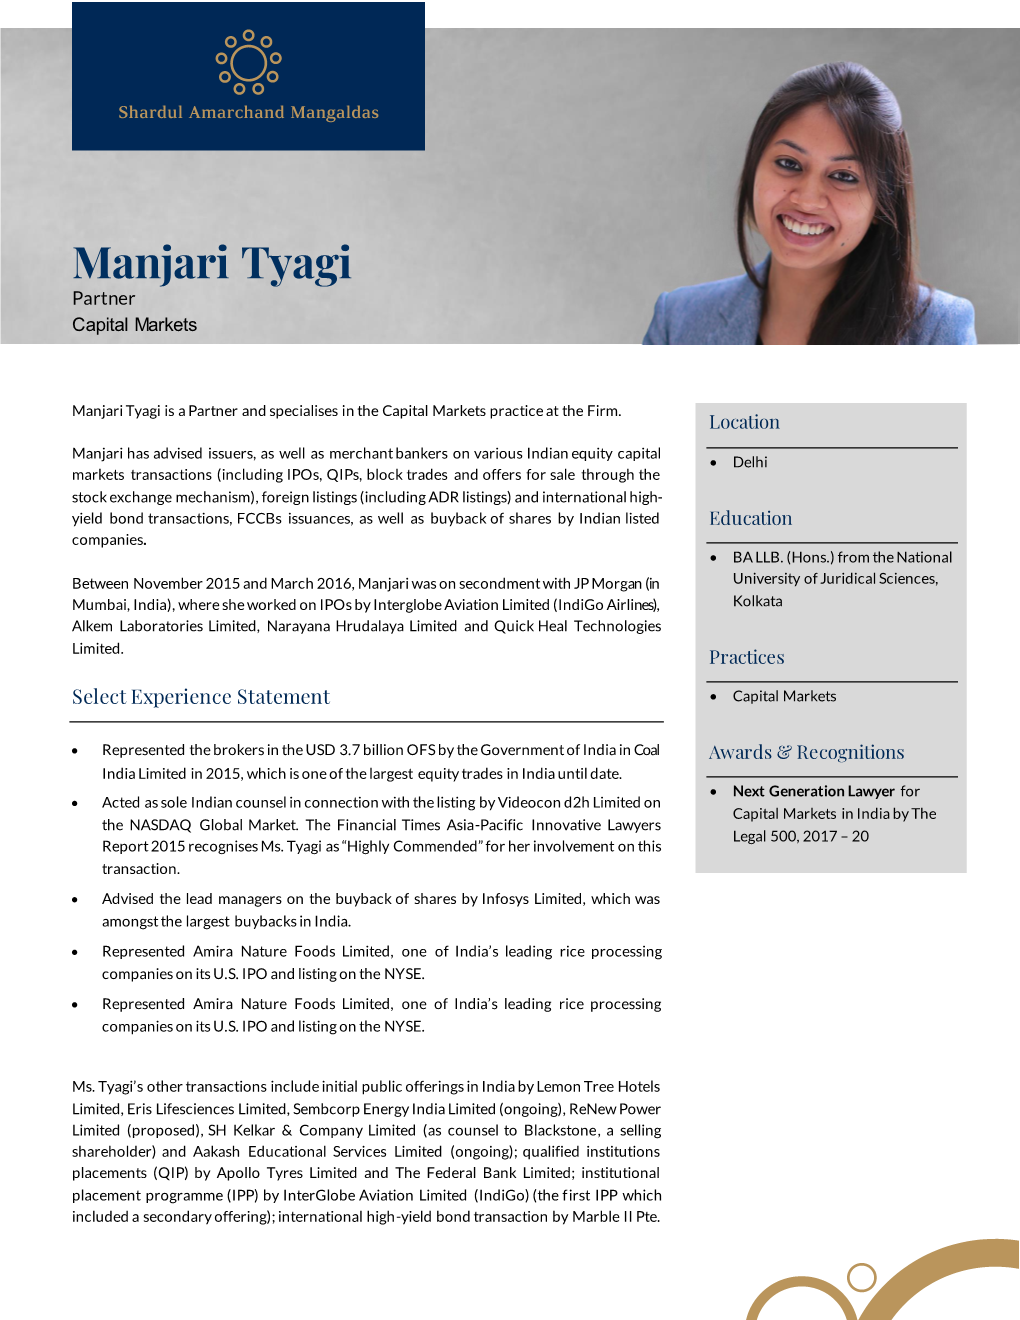 Manjari Tyagi Partner Capital Markets